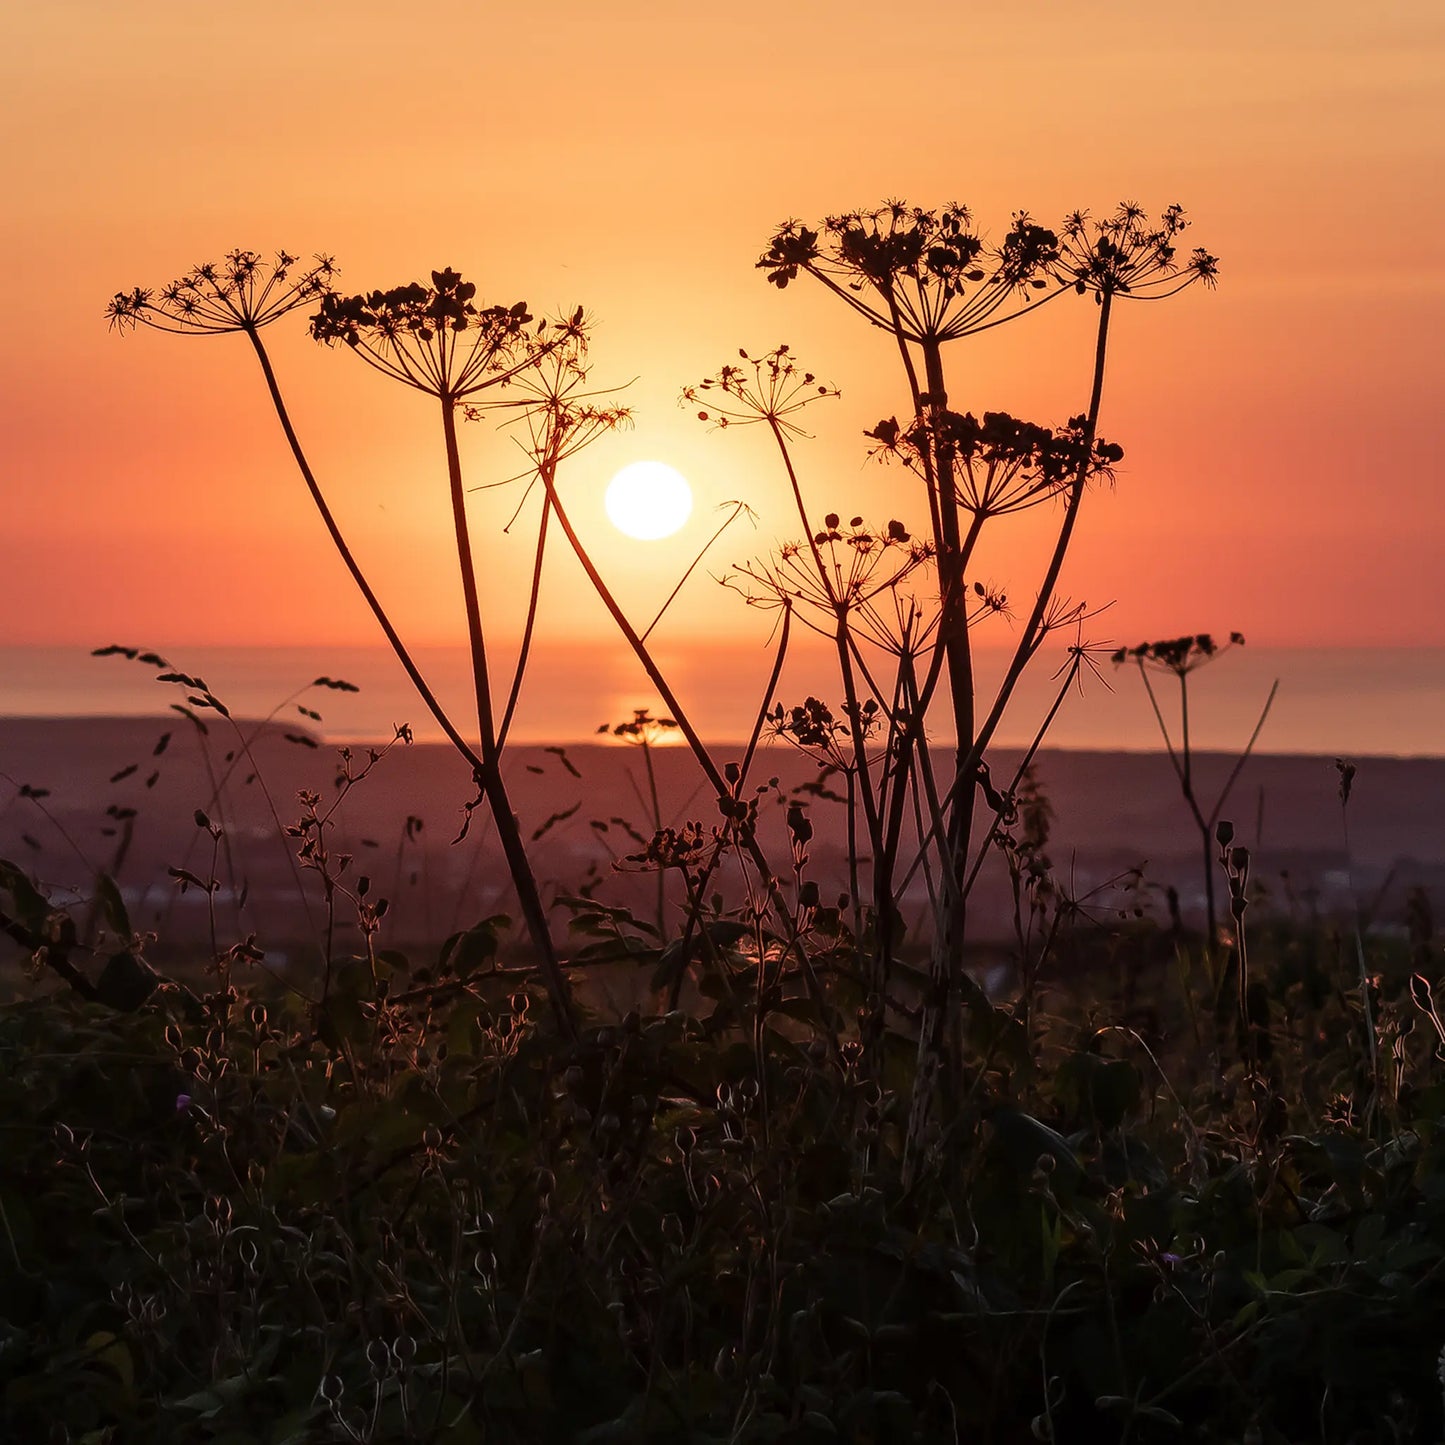 Cornish Greeting Card image, sun setting into the sea